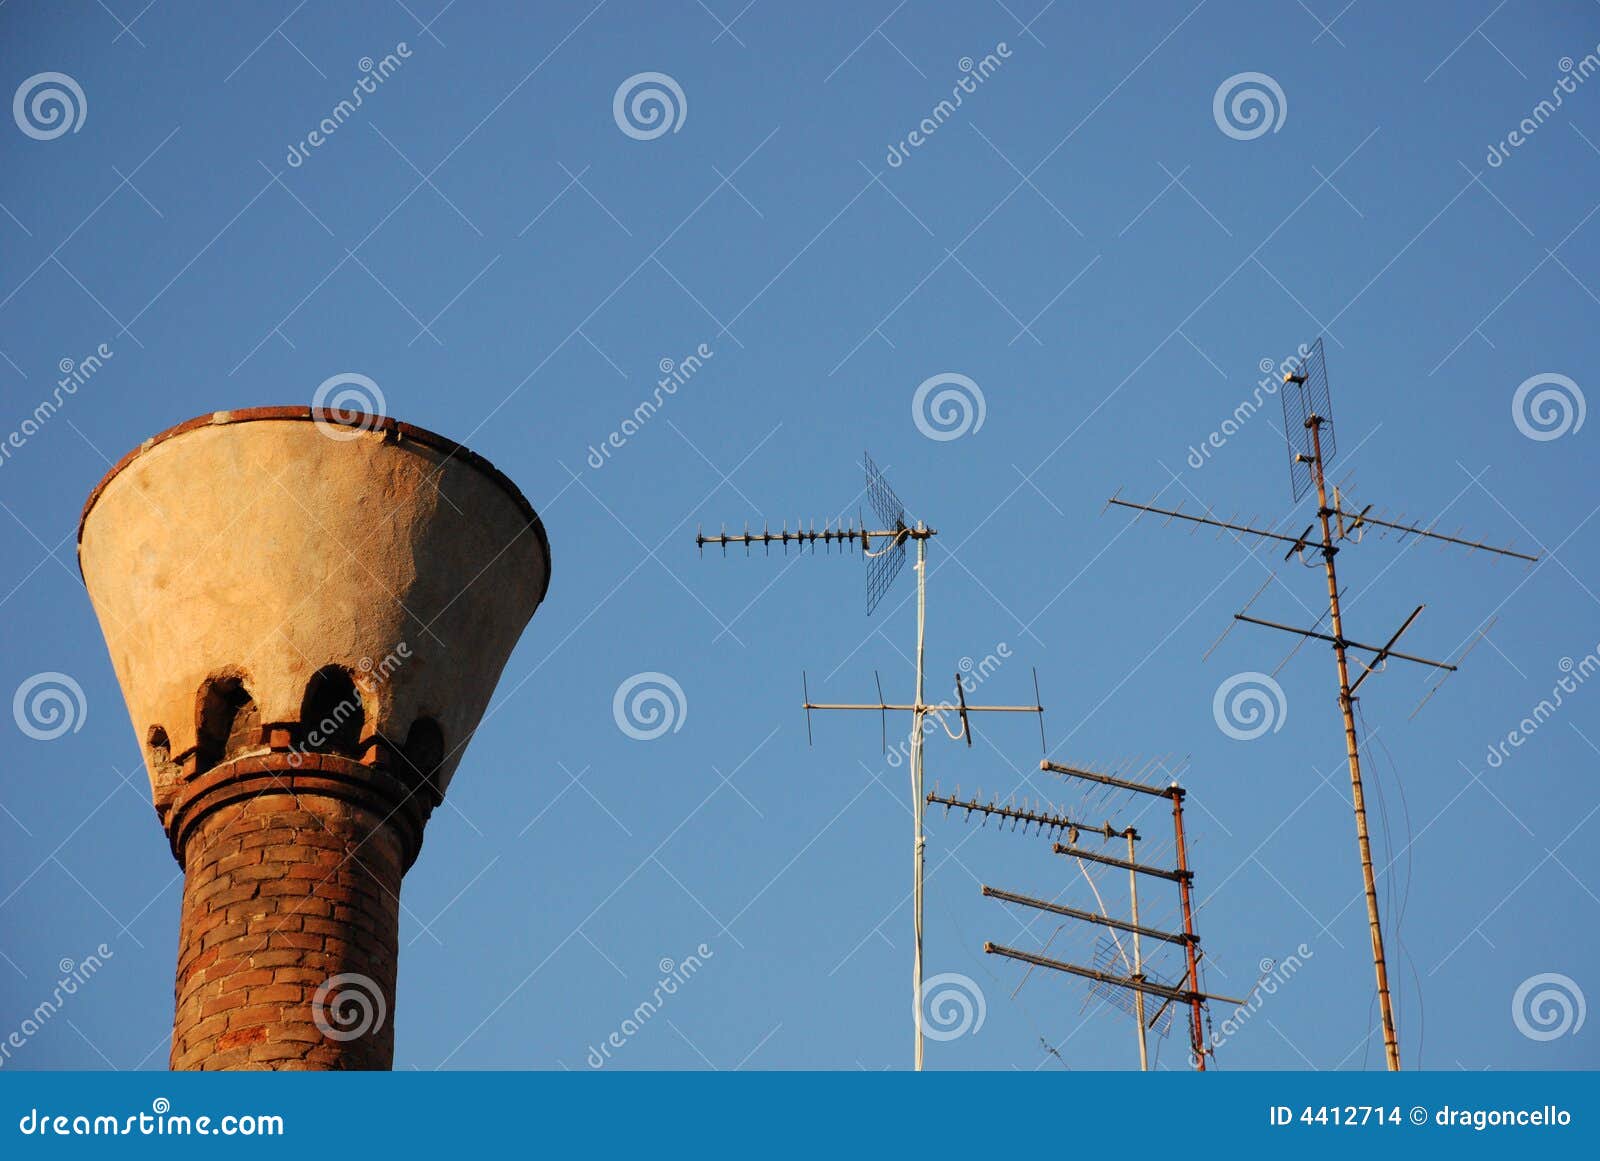 chimney with aerials